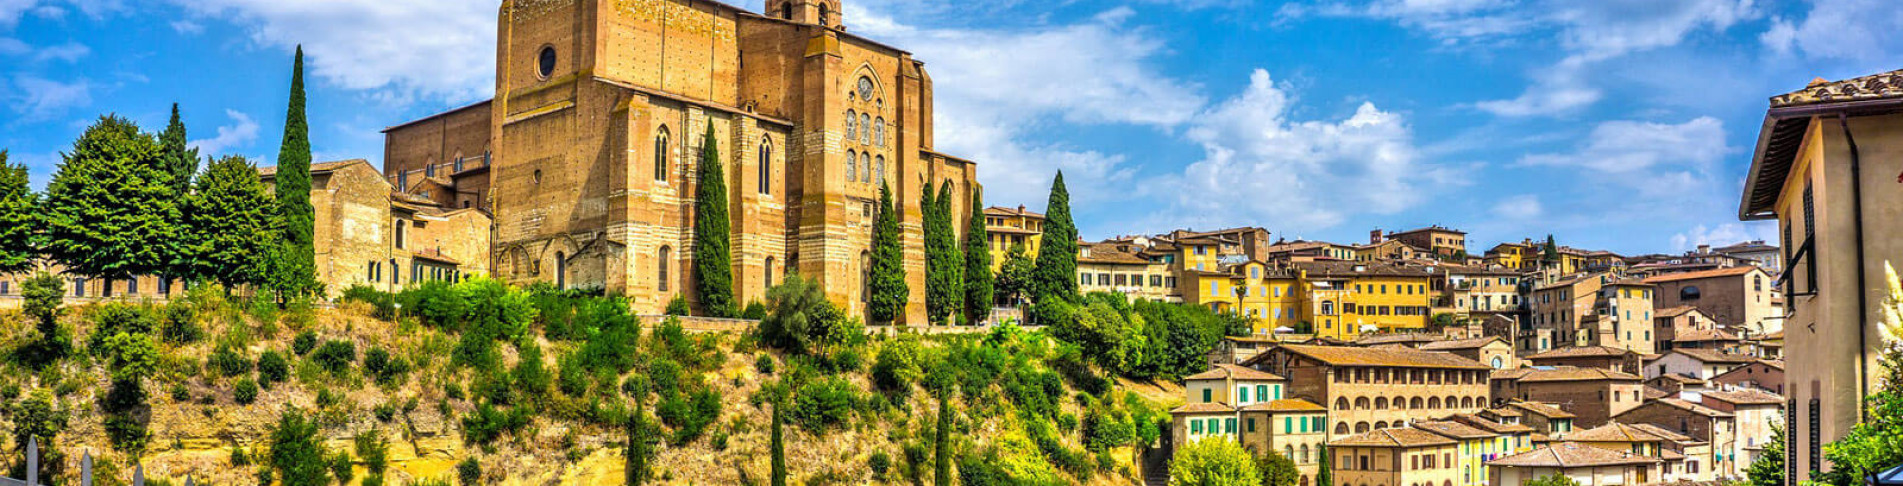 Toskana Reise nach Siena